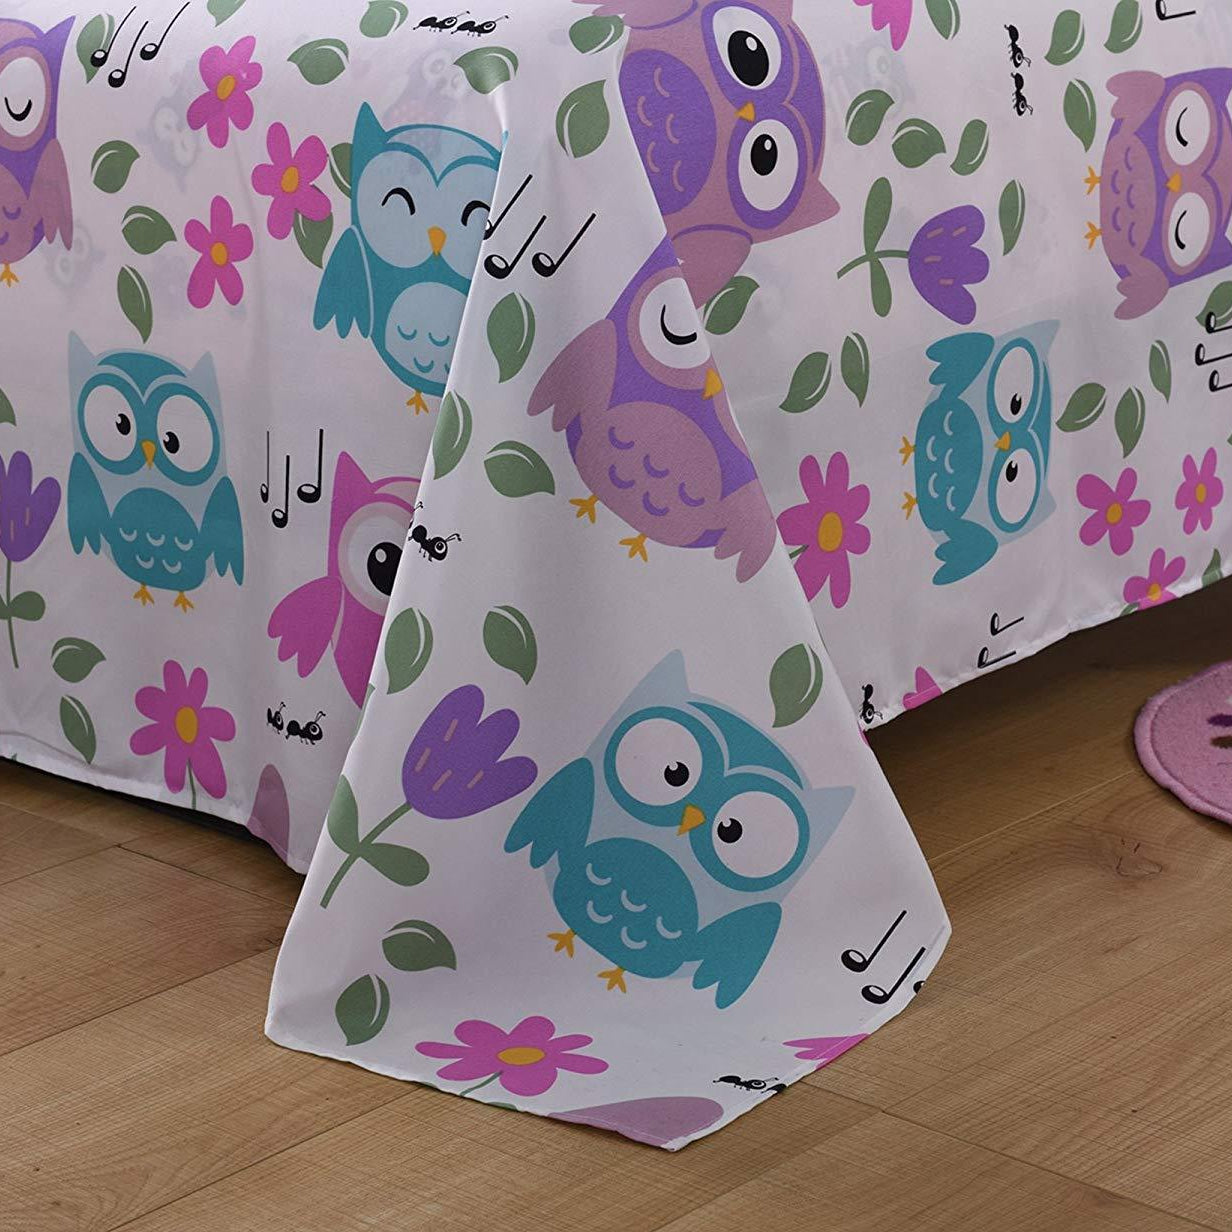 Kids Comforter Set Girls Comforter Set Kids Bedding Set Include Sheet Set Bunk Beds for Kids Twin/Full, Owl